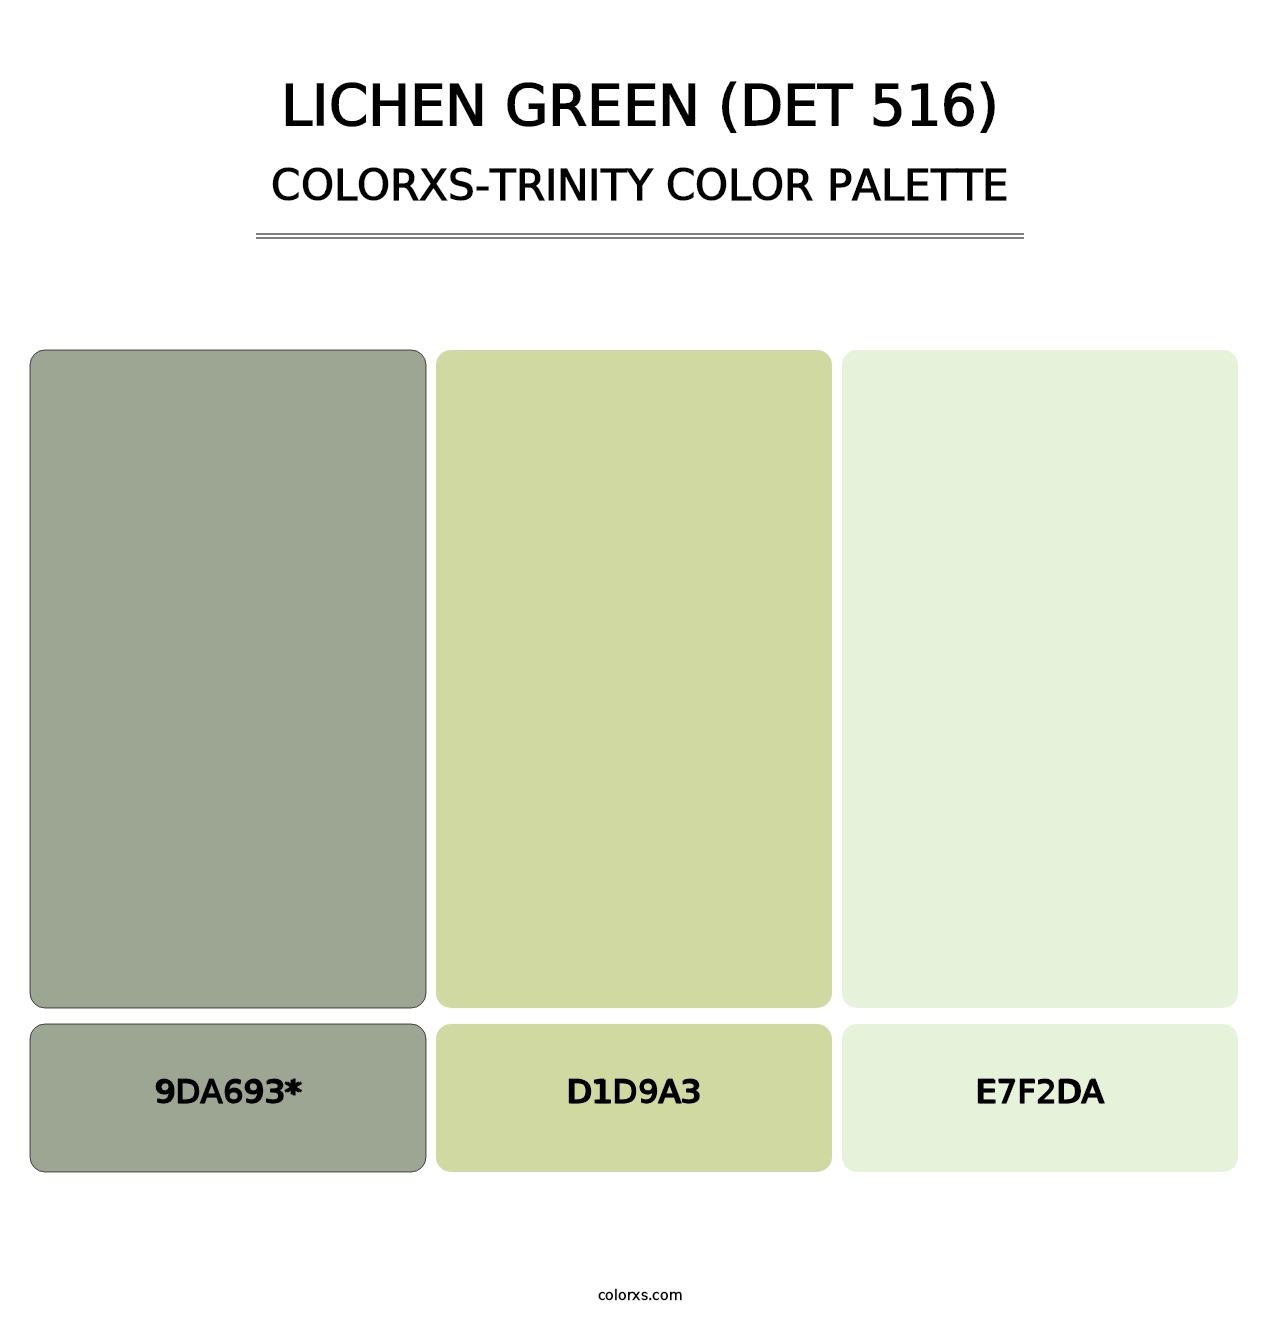 Lichen Green (DET 516) - Colorxs Trinity Palette